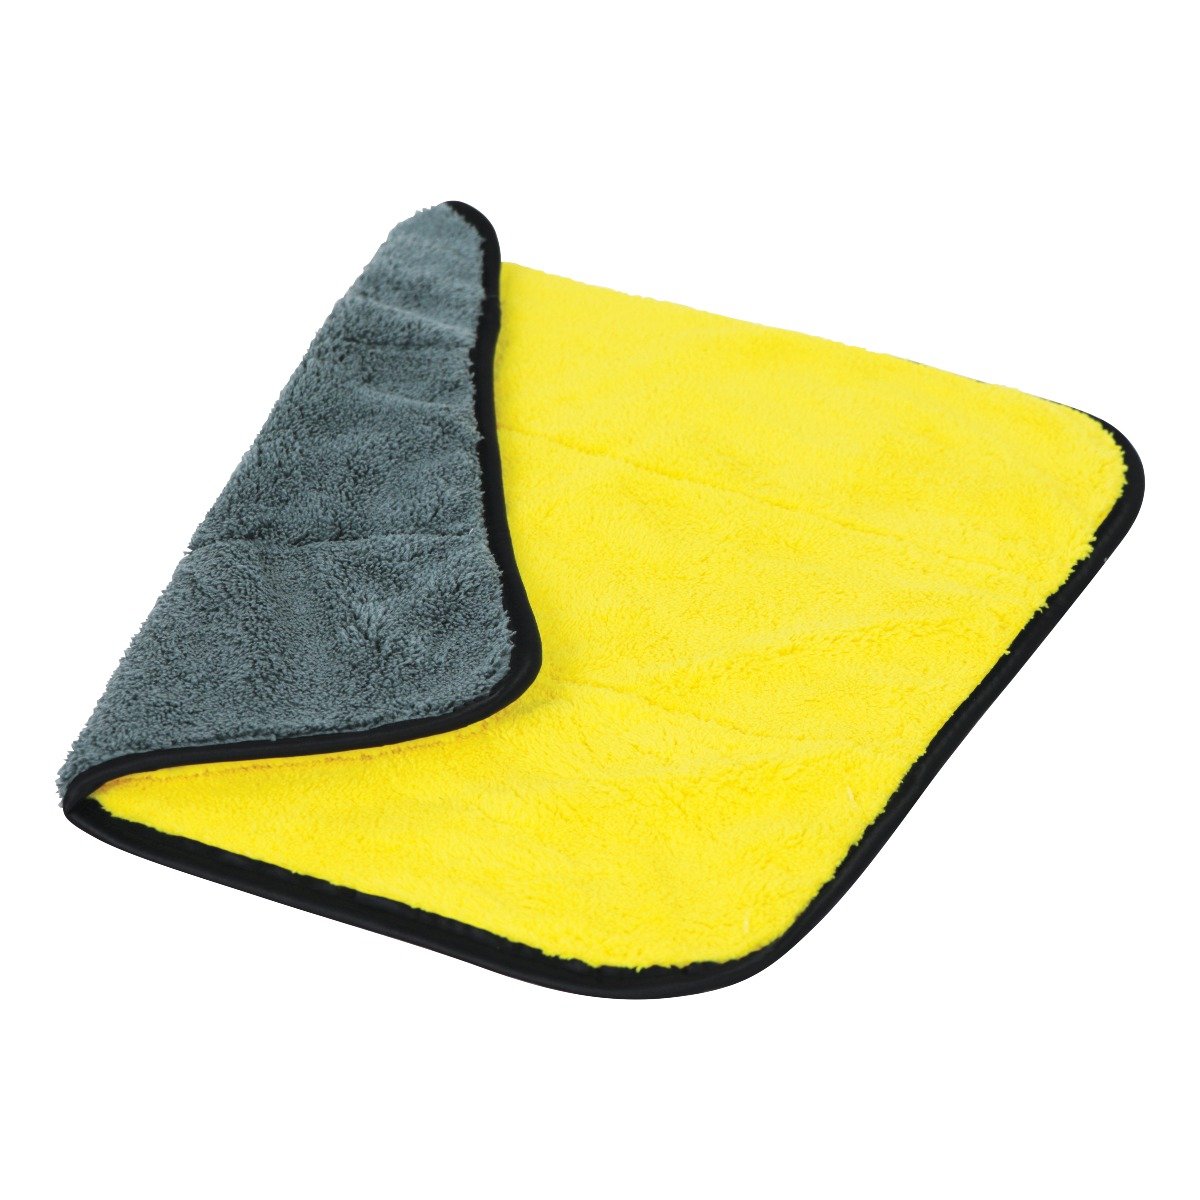 Softfibre Finishing Towel - 40x40cm